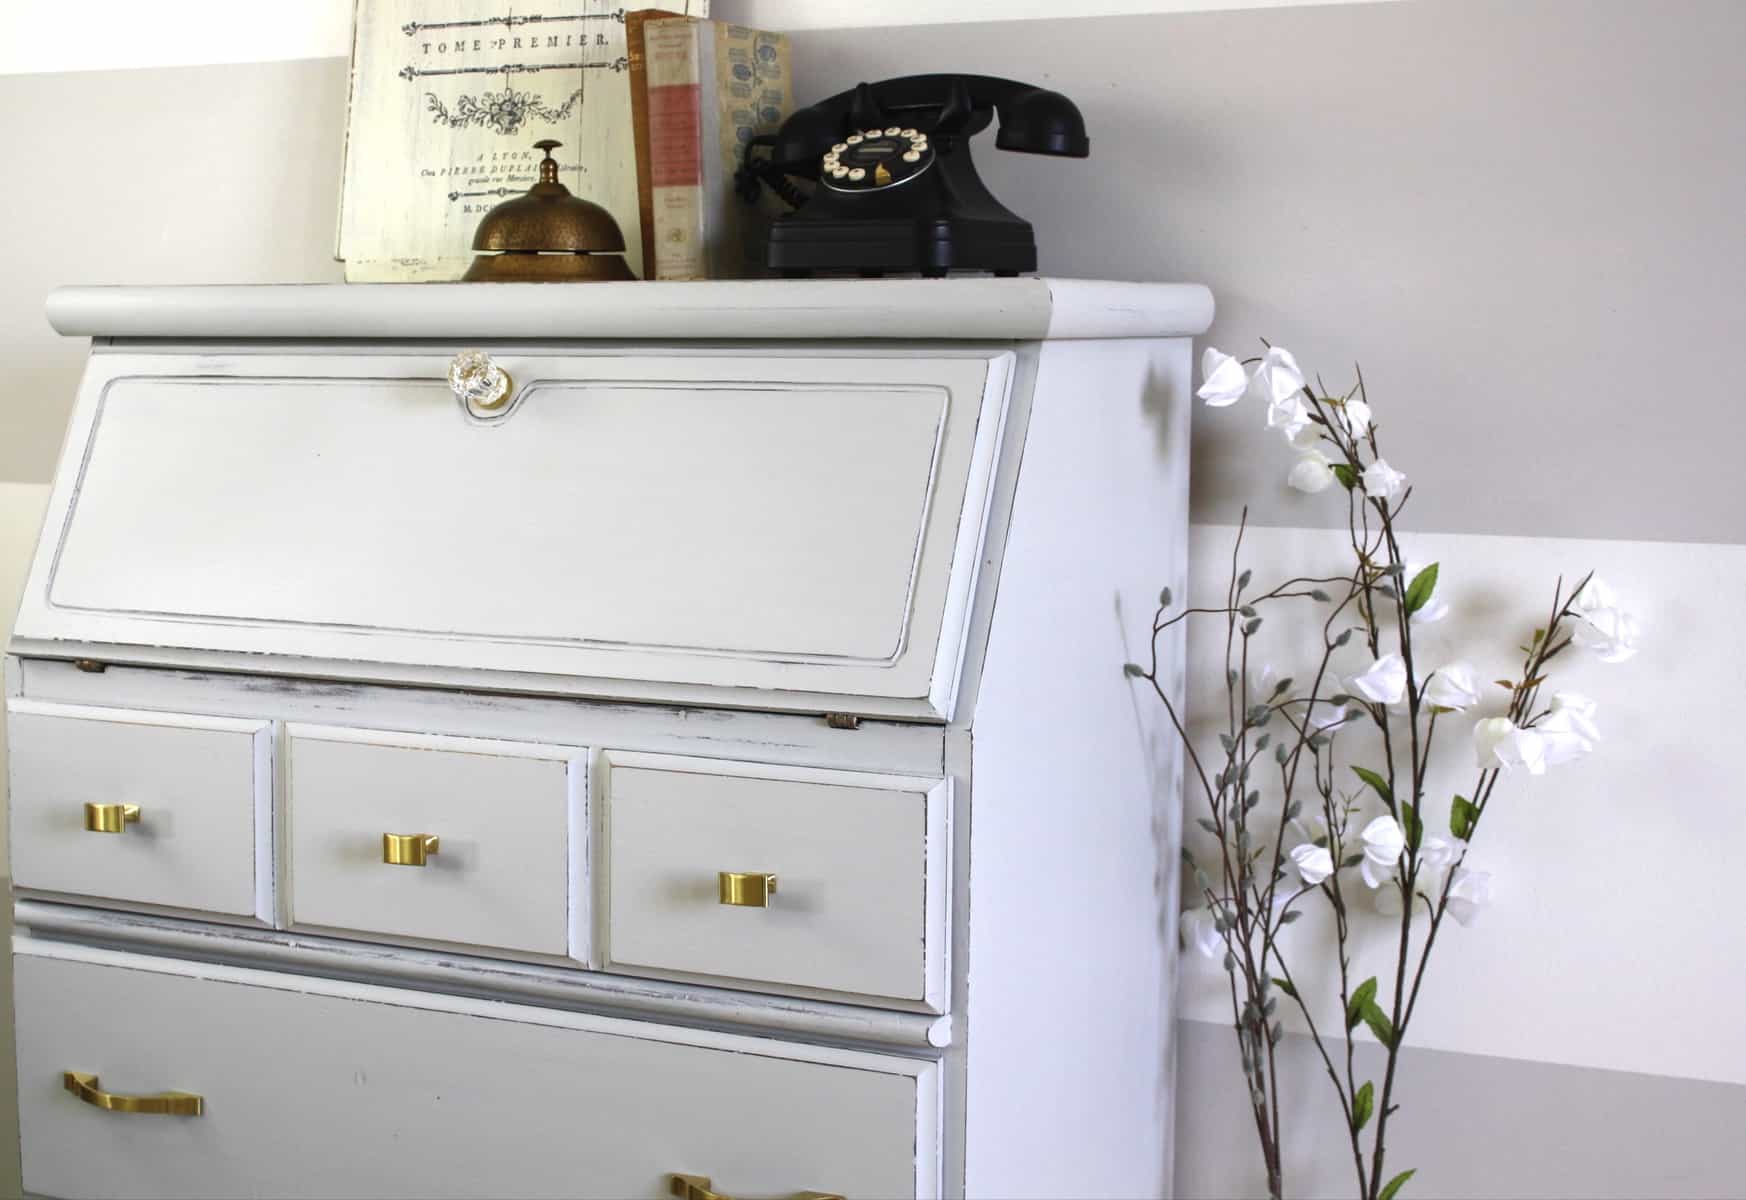 An Unloved Cabinet Goes Glam #DIY #furniturepaint #paintedfurniture #homedecor #chalkpaint #secretary #cabinet #desk #grey #blue #refurbish #countrychicpaint - blog.countrychicpaint.com